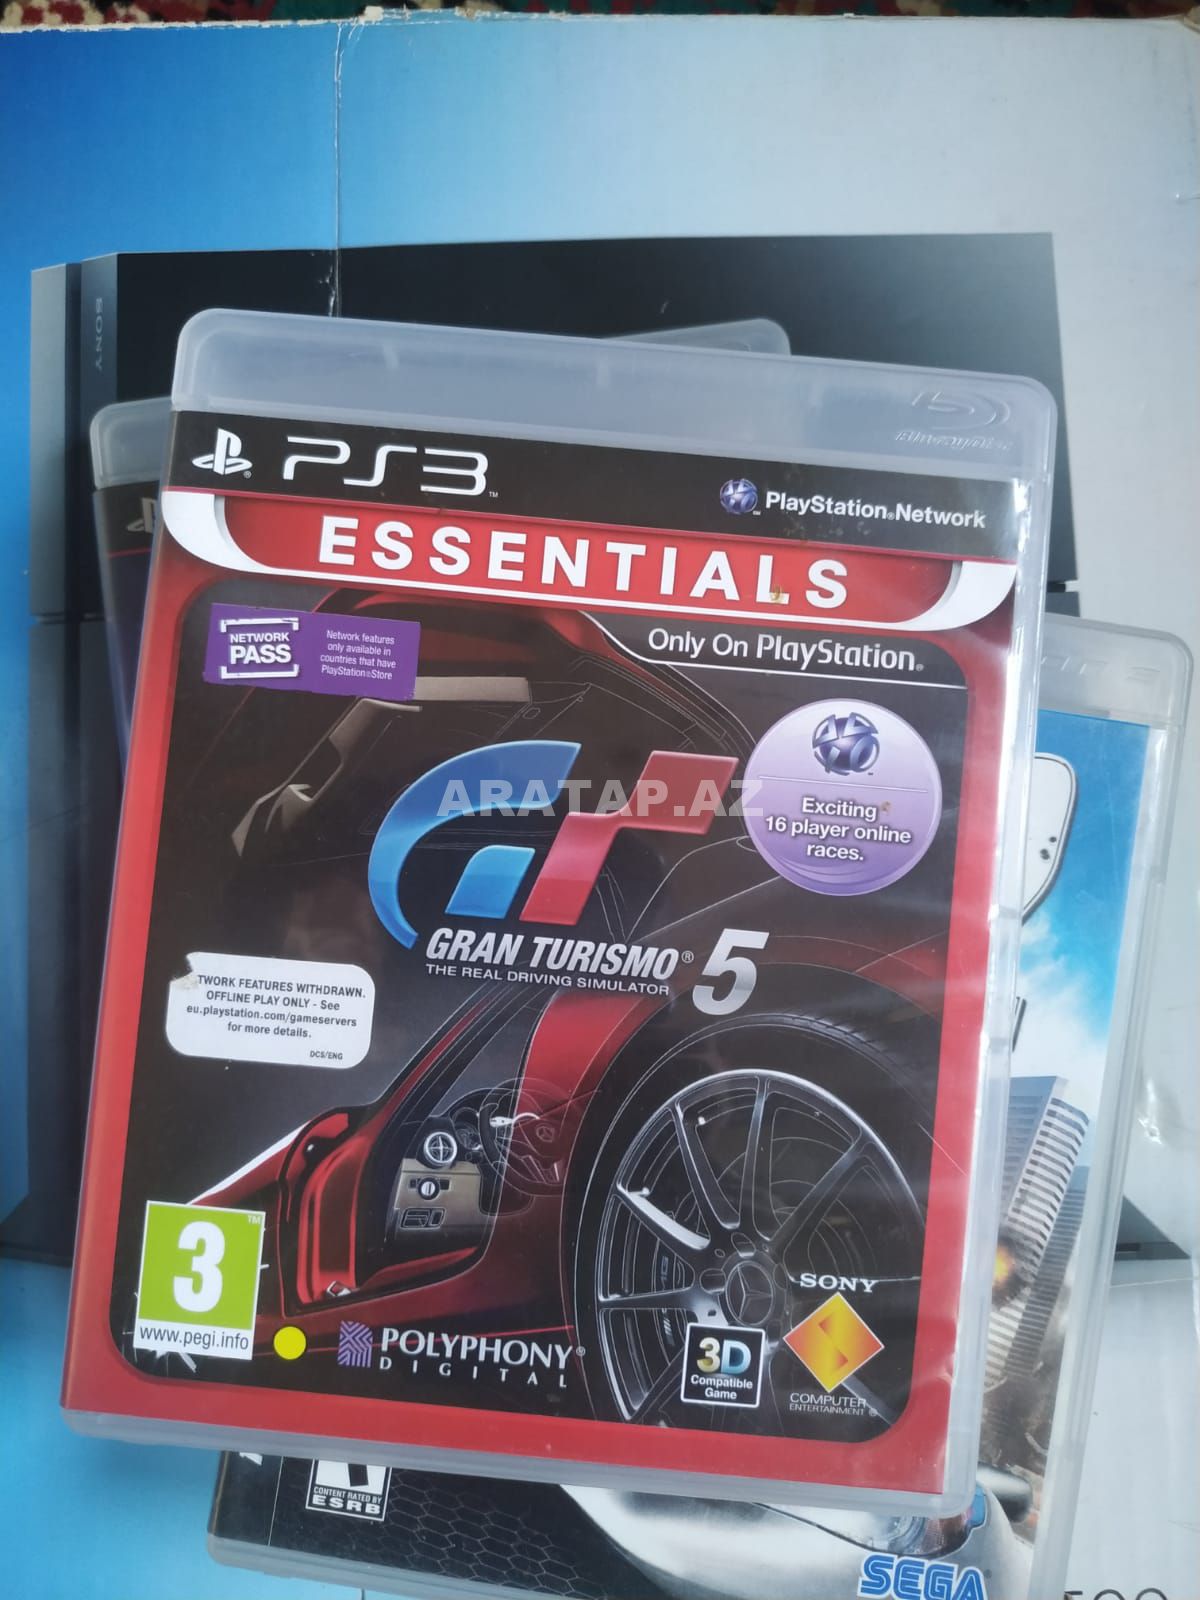 Playstation 3 "GRAN TURİSMO 5" oyun diski